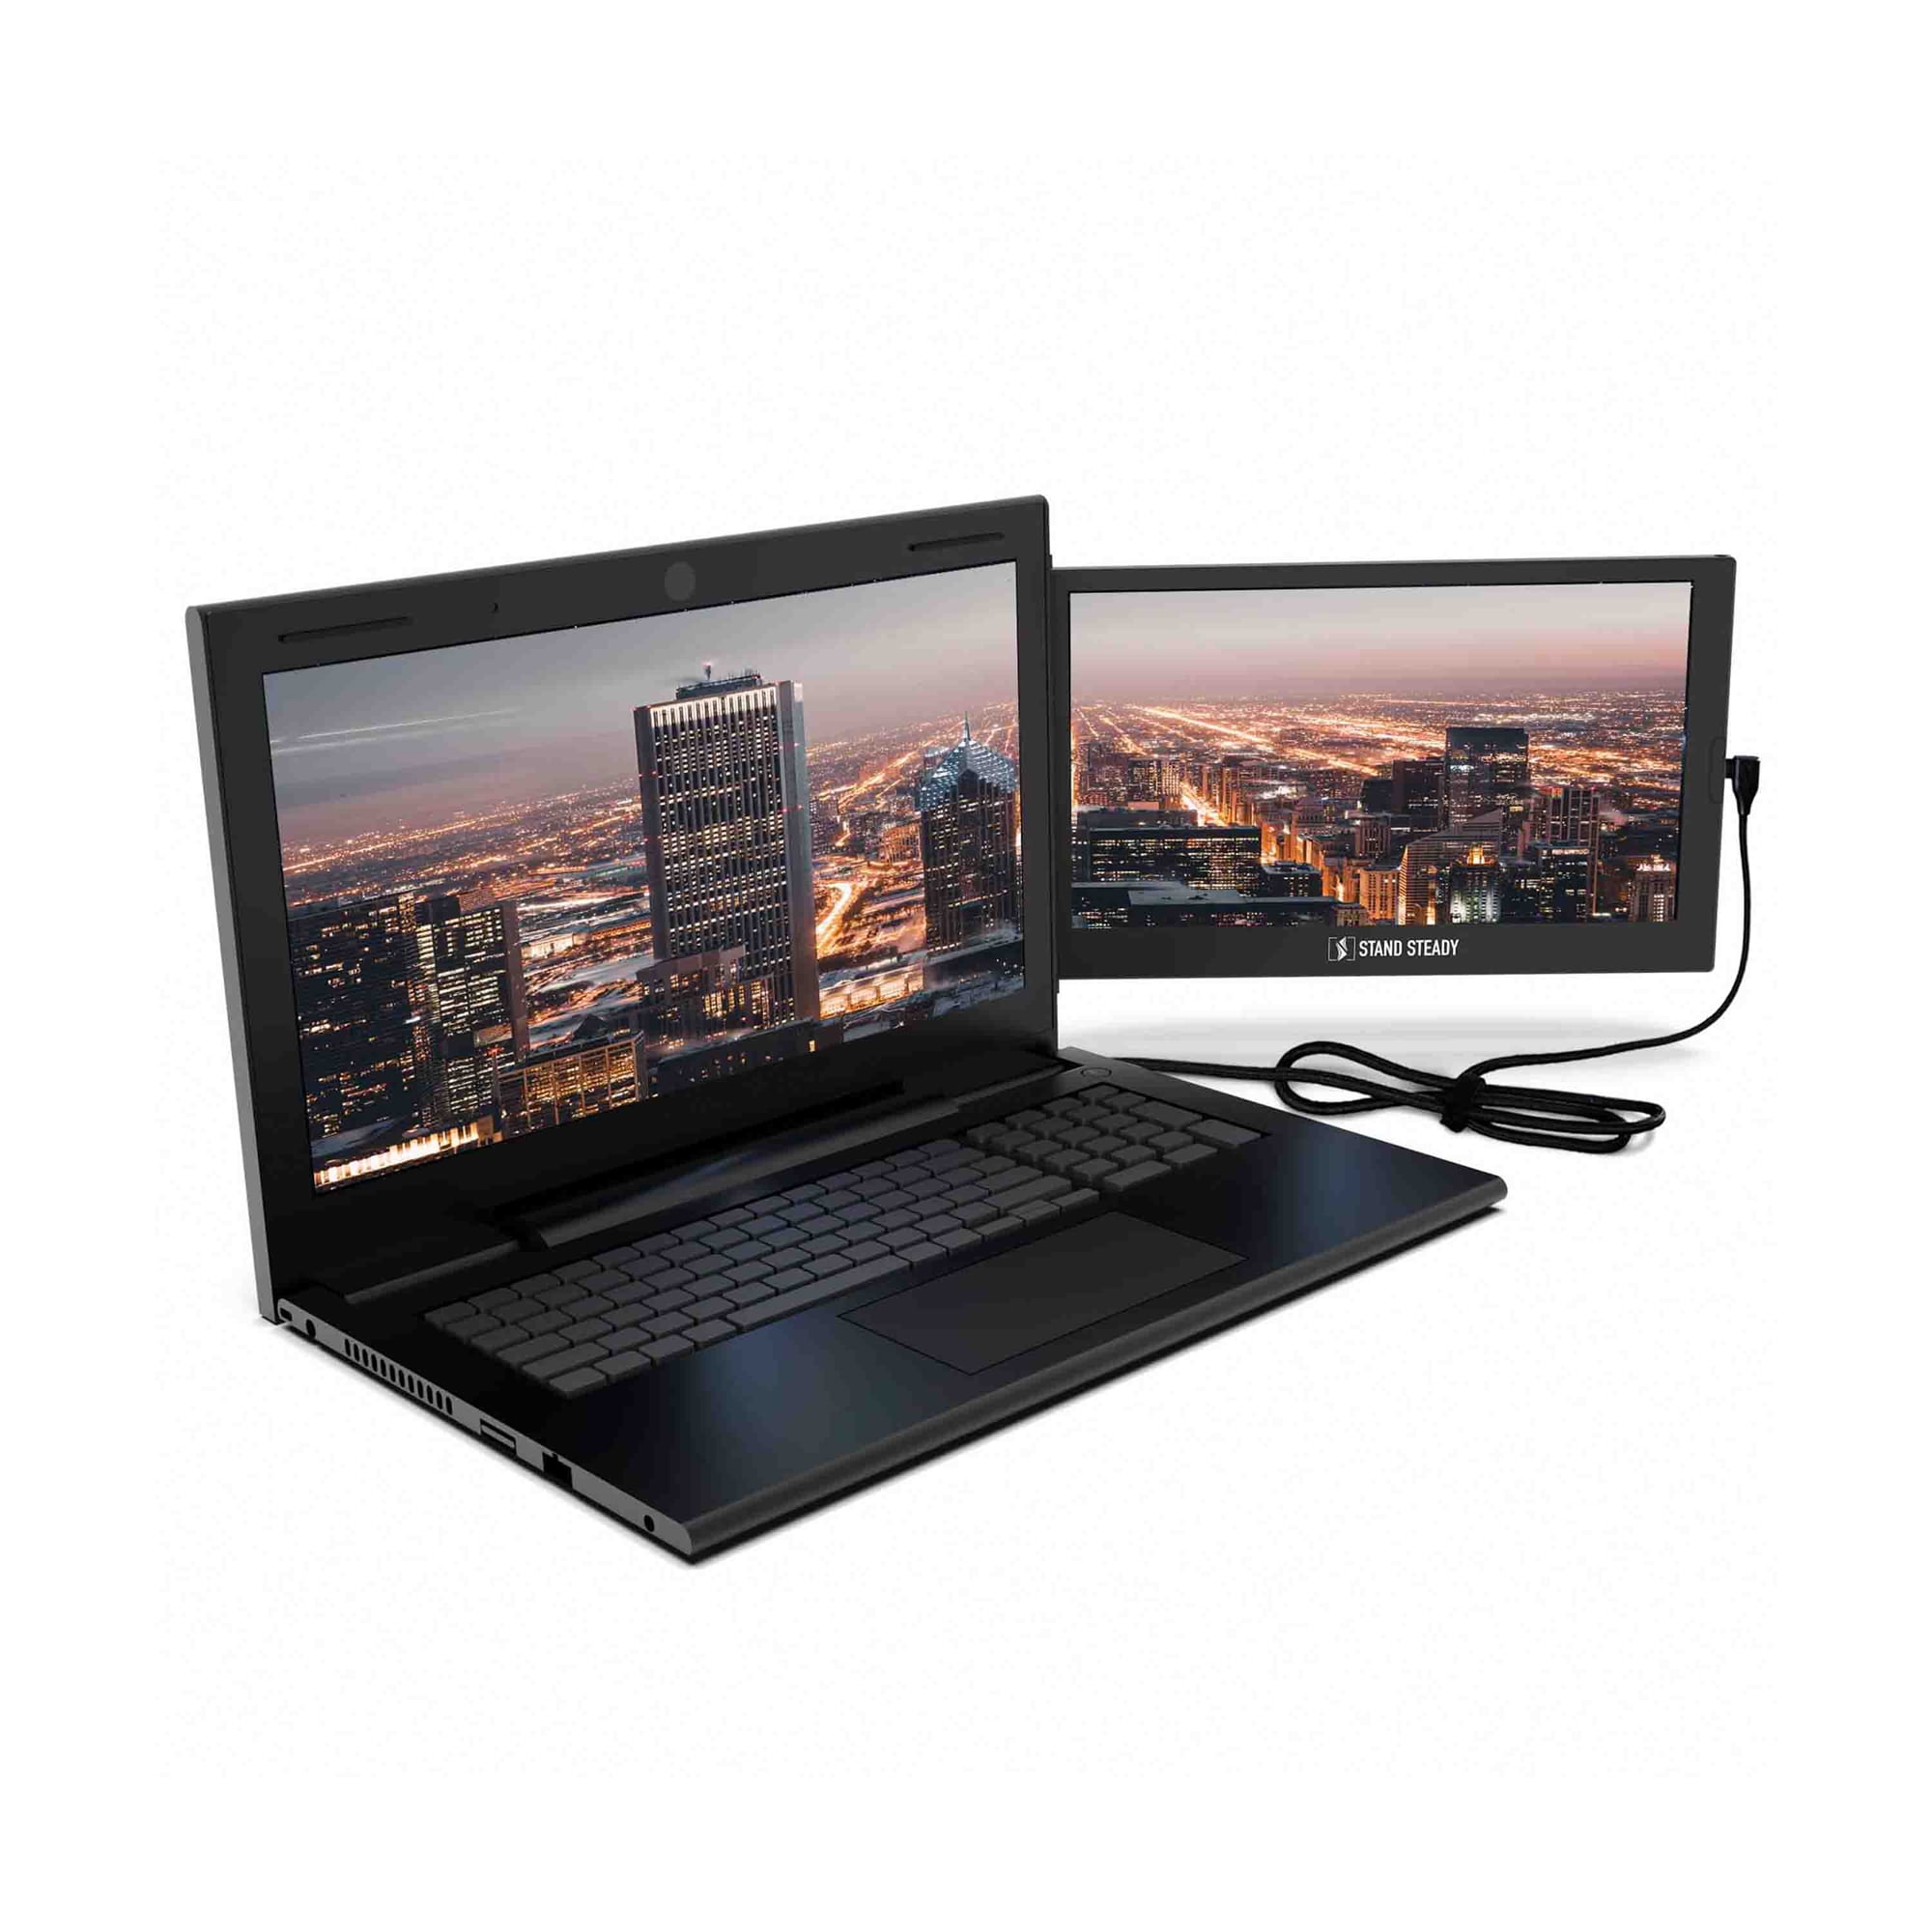 SideTrak Slide 12.5 IPS LCD FHD Monitor (USB-C) Black Black ST12BL - Best  Buy